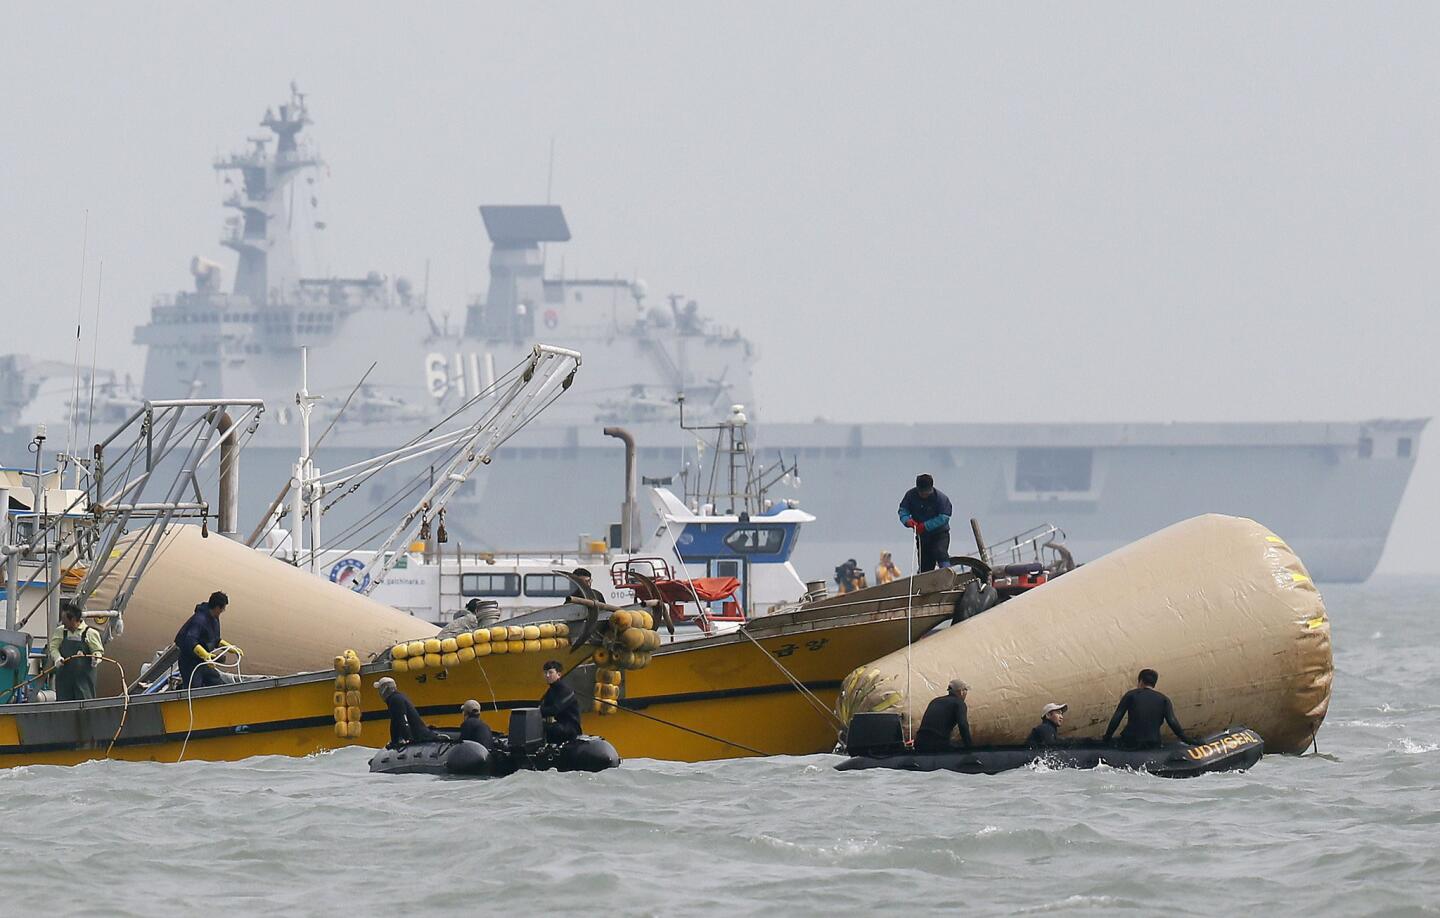 Ferry sinking